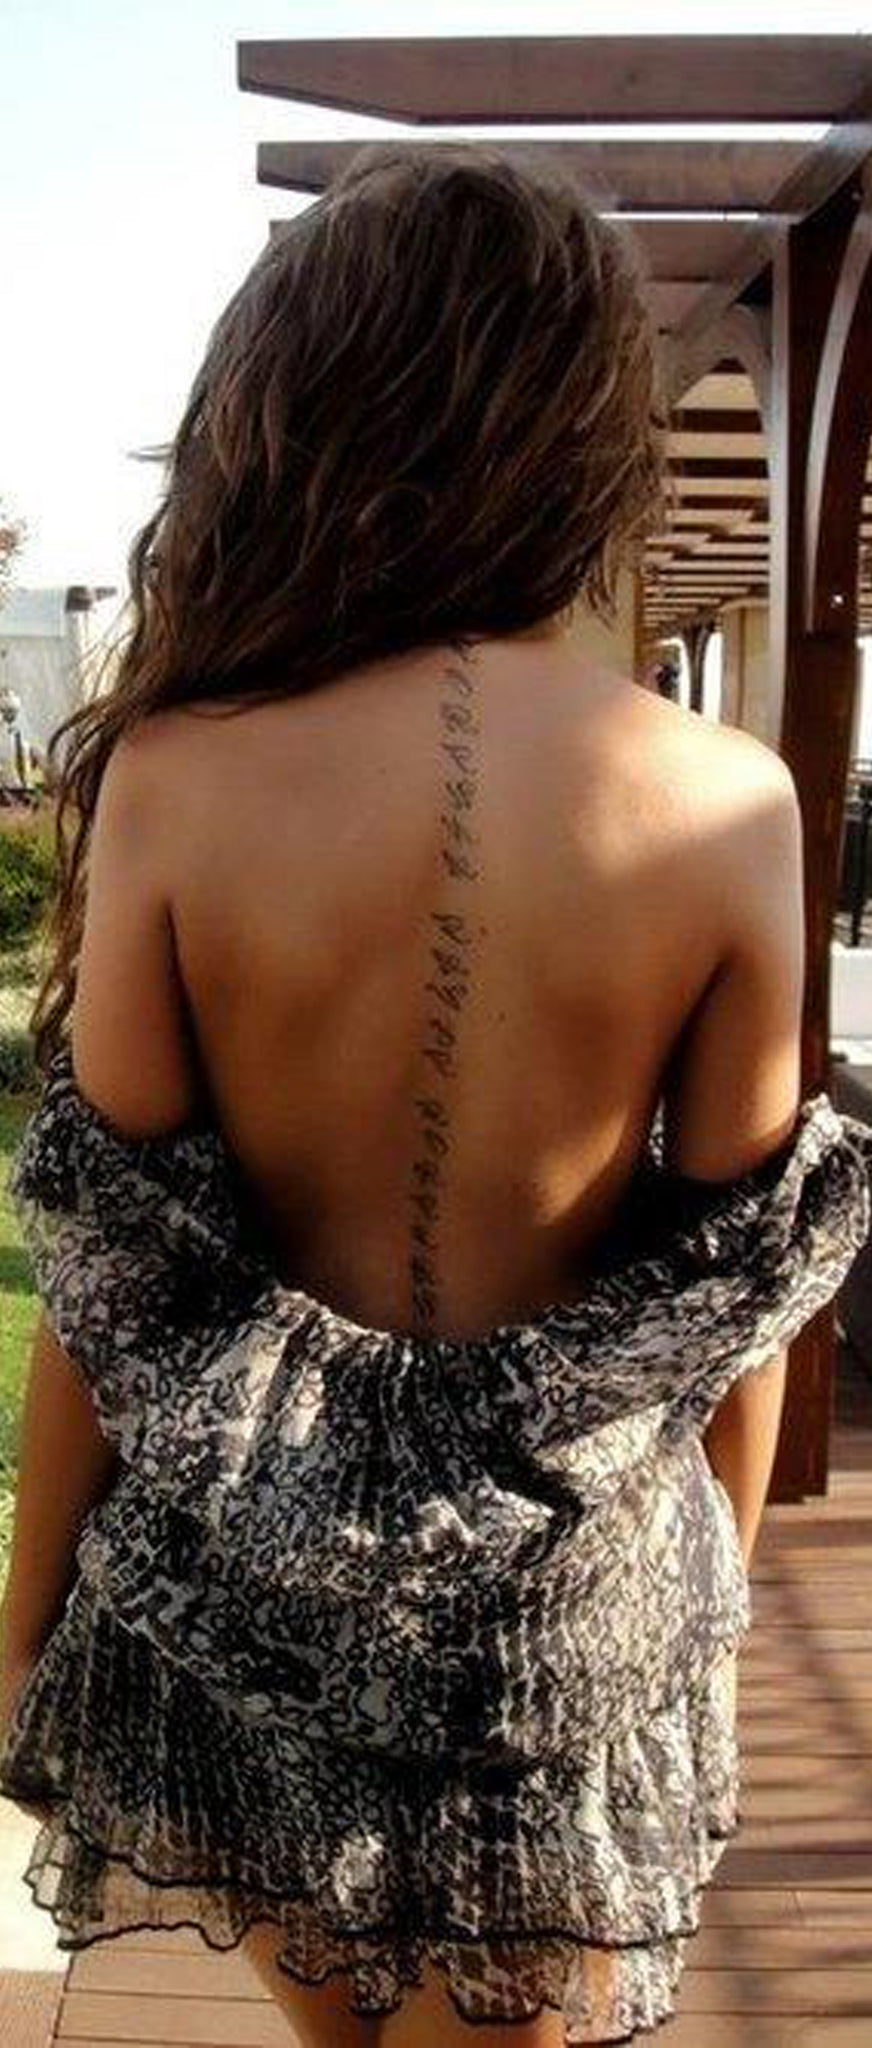 Script Quote Cursive Text Spine Tattoo Ideas for Women - Indian Back Tat - ideas tribales espalda tatuaje para mujeres - www.MyBodiArt.com